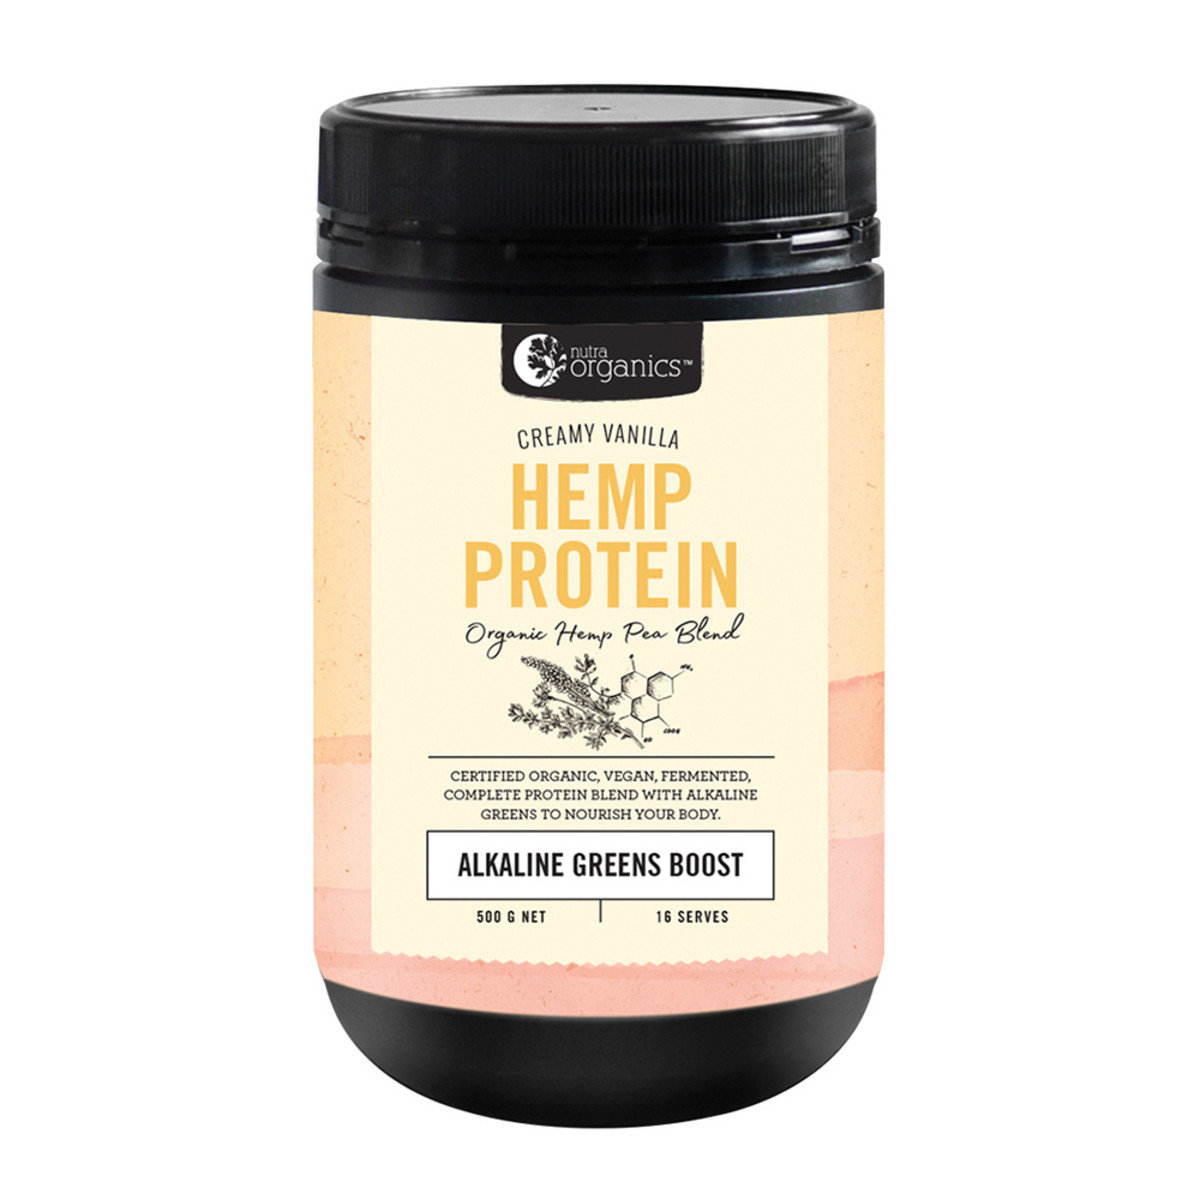 NUTRA ORGANICS -  Hemp Protein (Organic Hemp Pea Blend - Alkaline Greens Boost) Creamy Vanilla 500g